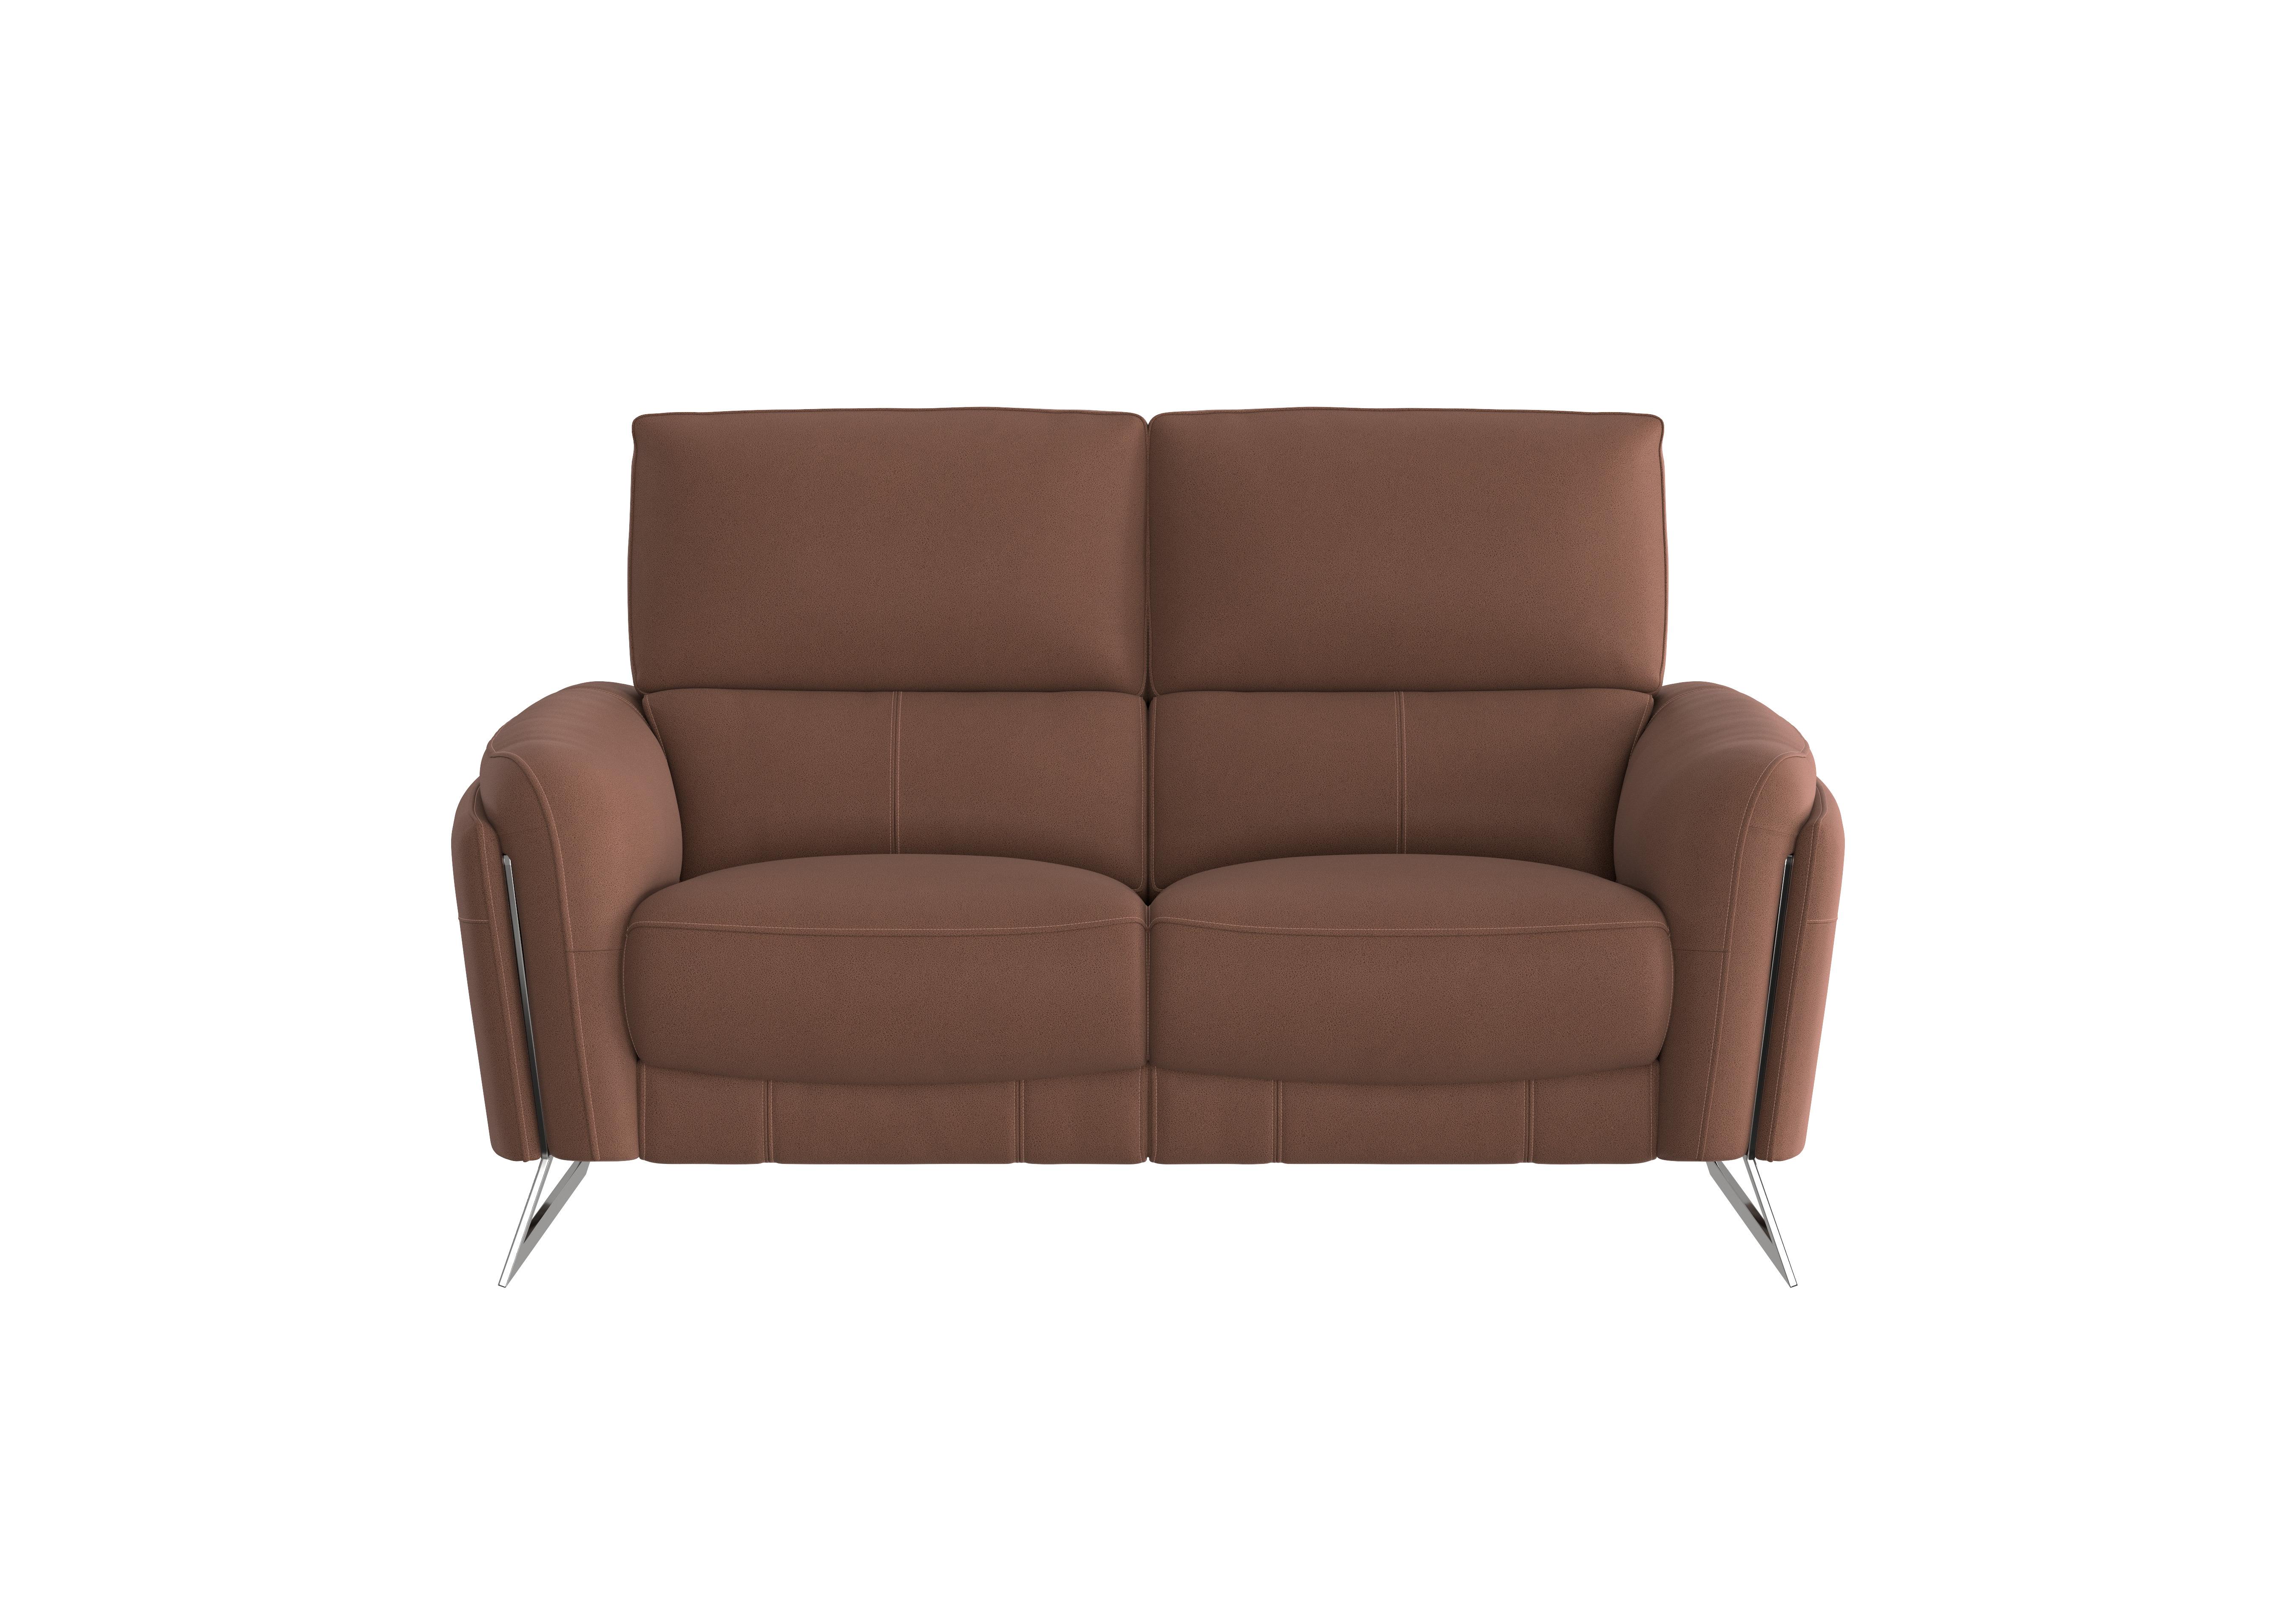 Amarilla 2 Seater Fabric Sofa in Bfa-Blj-R05 Dark Taupe on Furniture Village